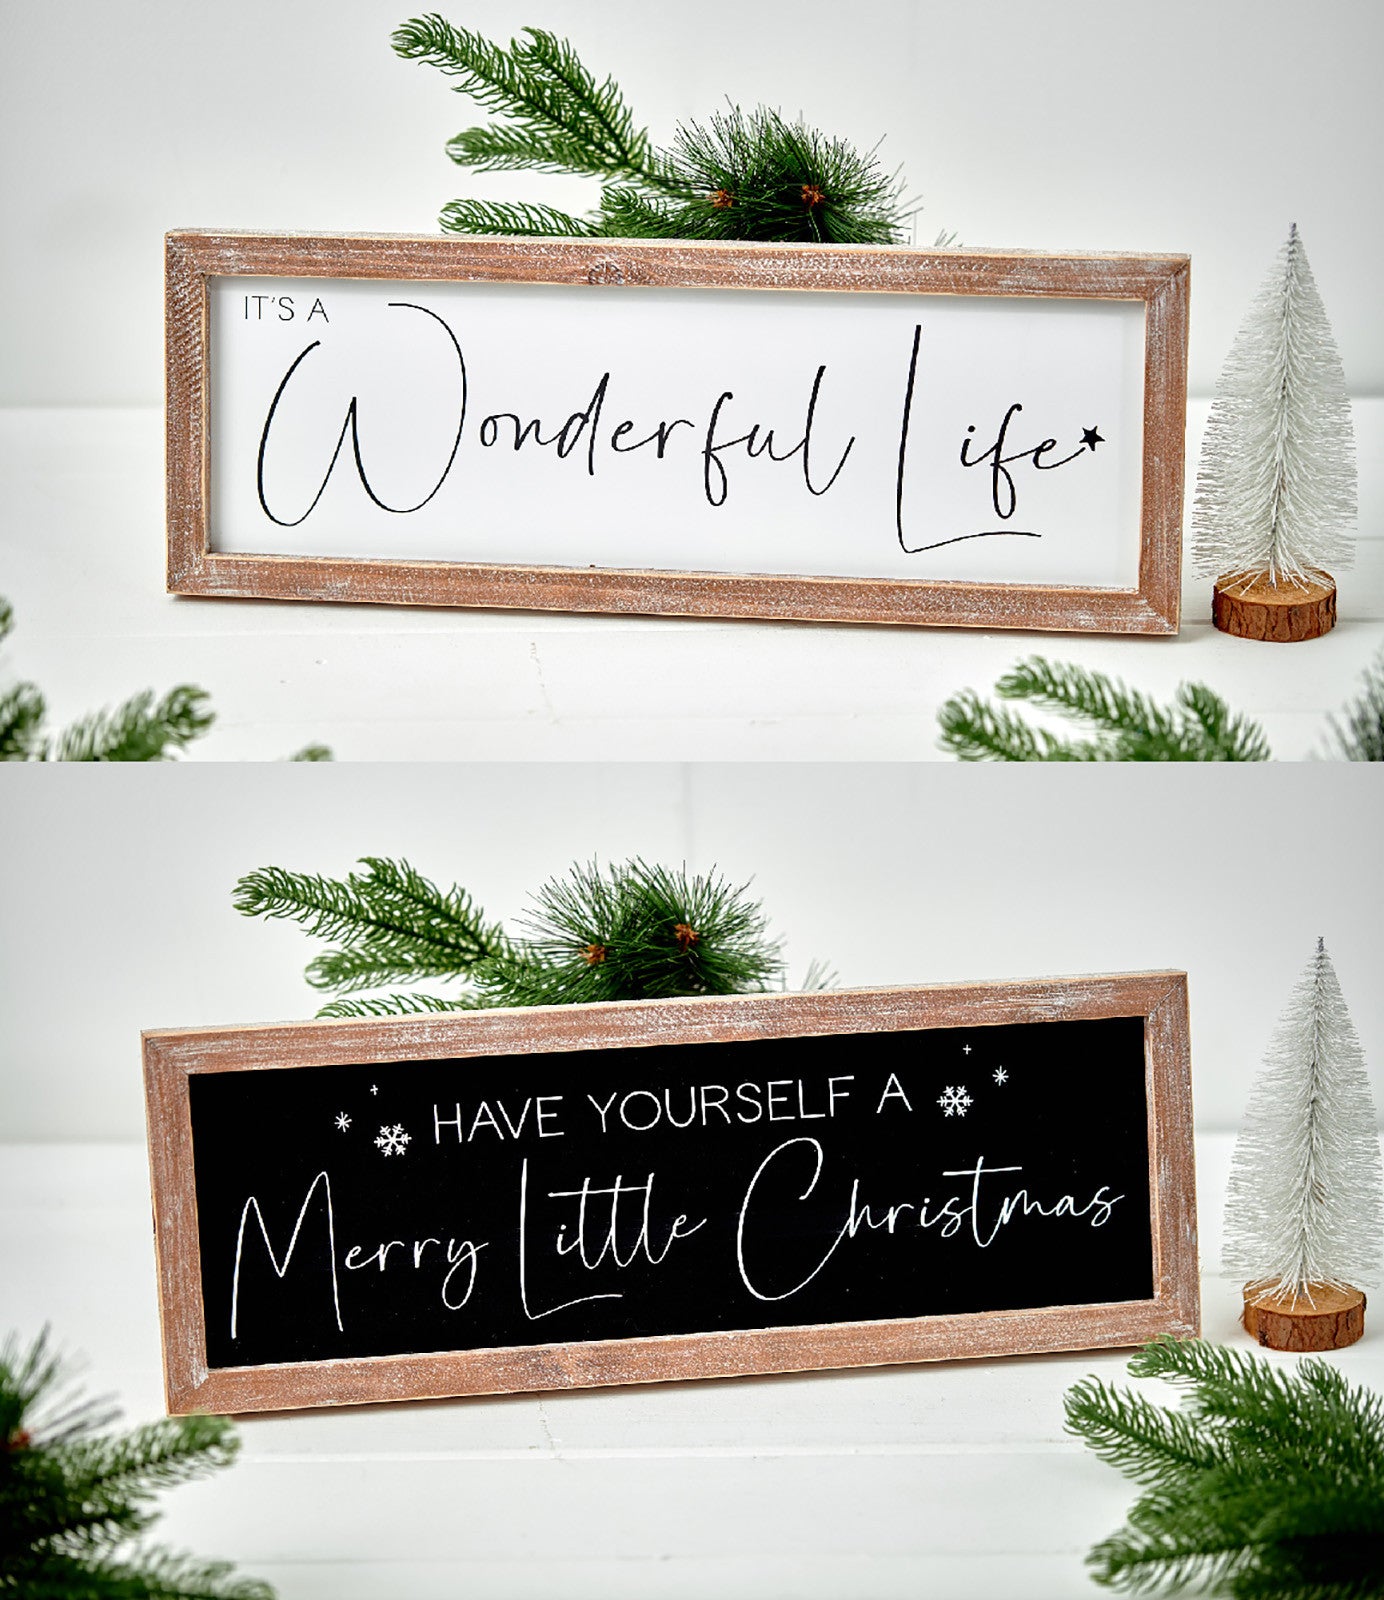 Reversible Merry Christmas - Wonderful life sign